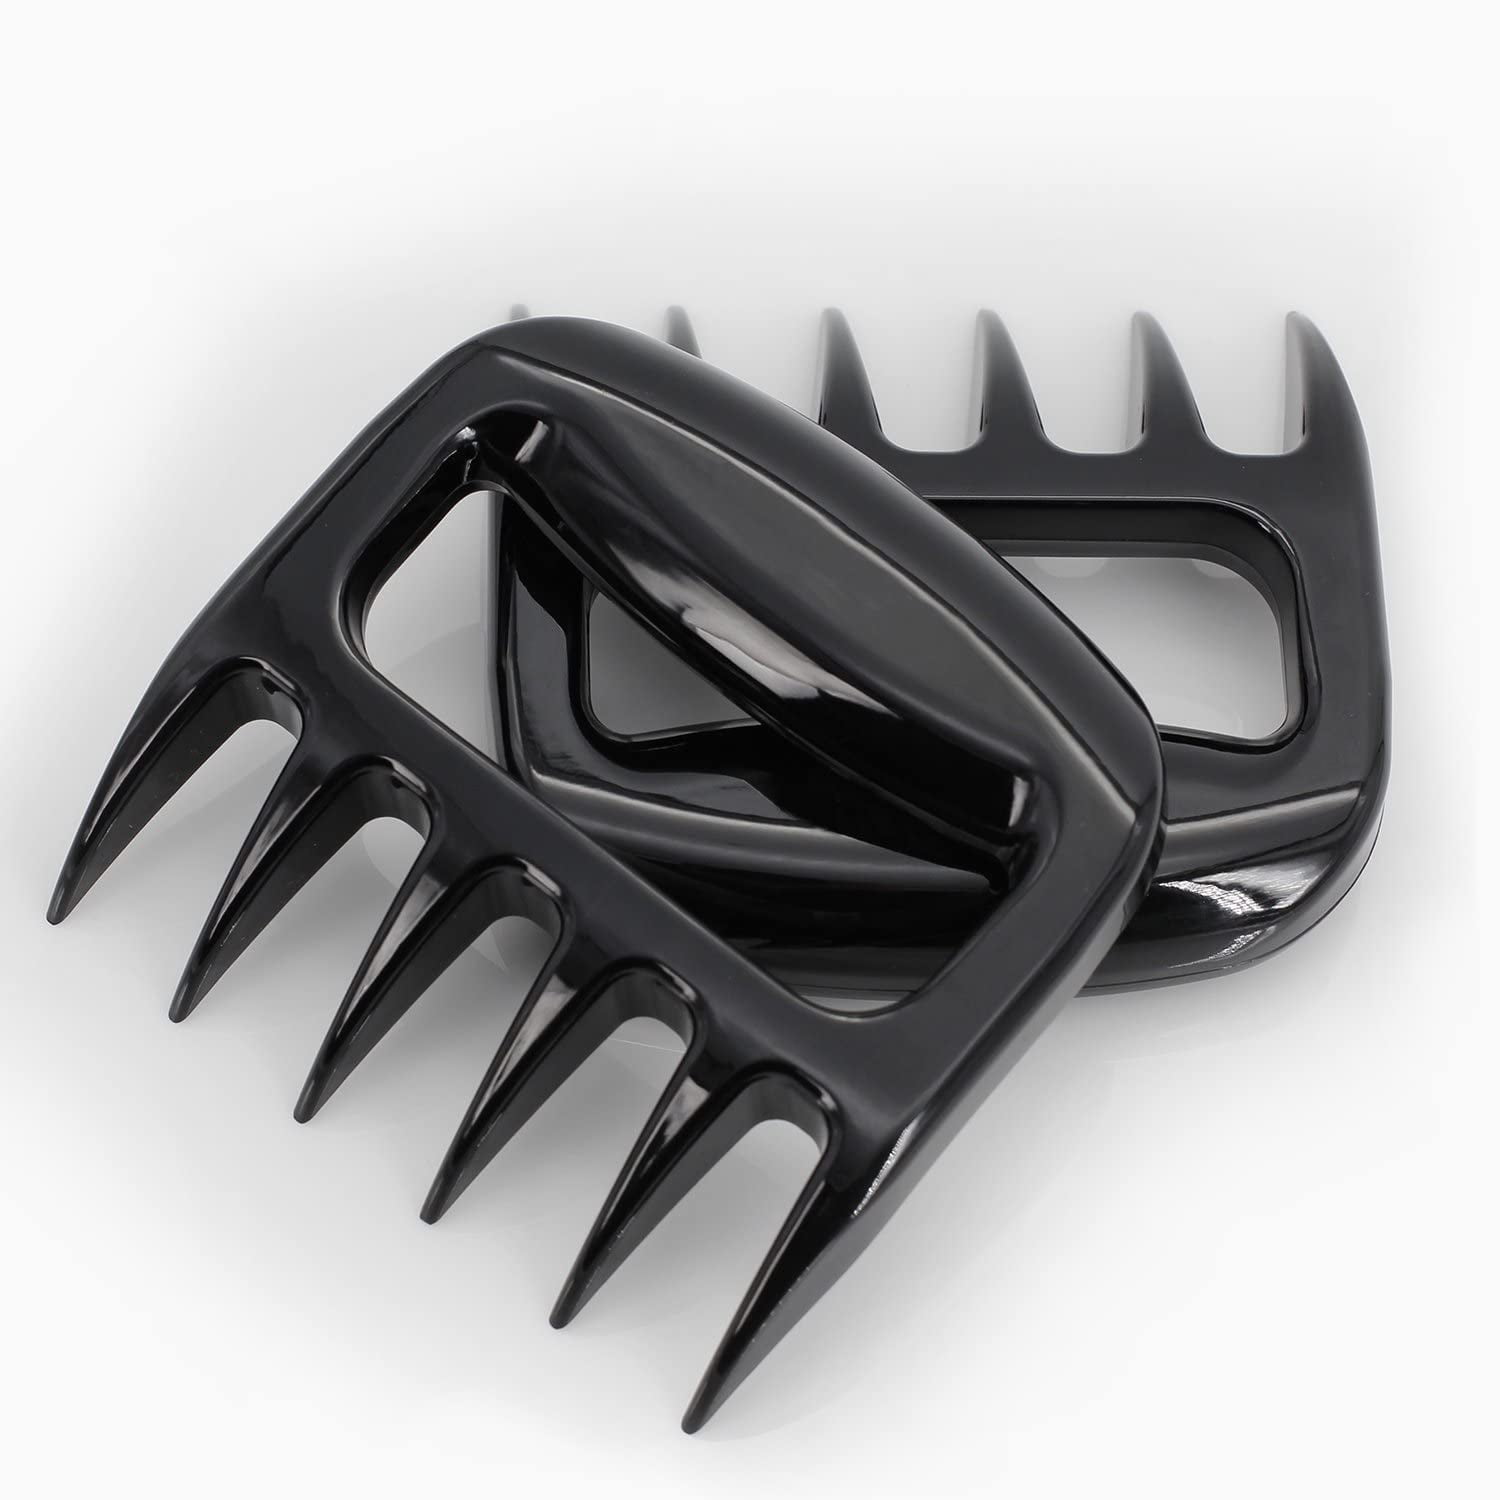 Pulled Pork Bear Claw Meat Shredder Forks For Shredding Brisket Bbq  Accessories - Tool Parts - AliExpress